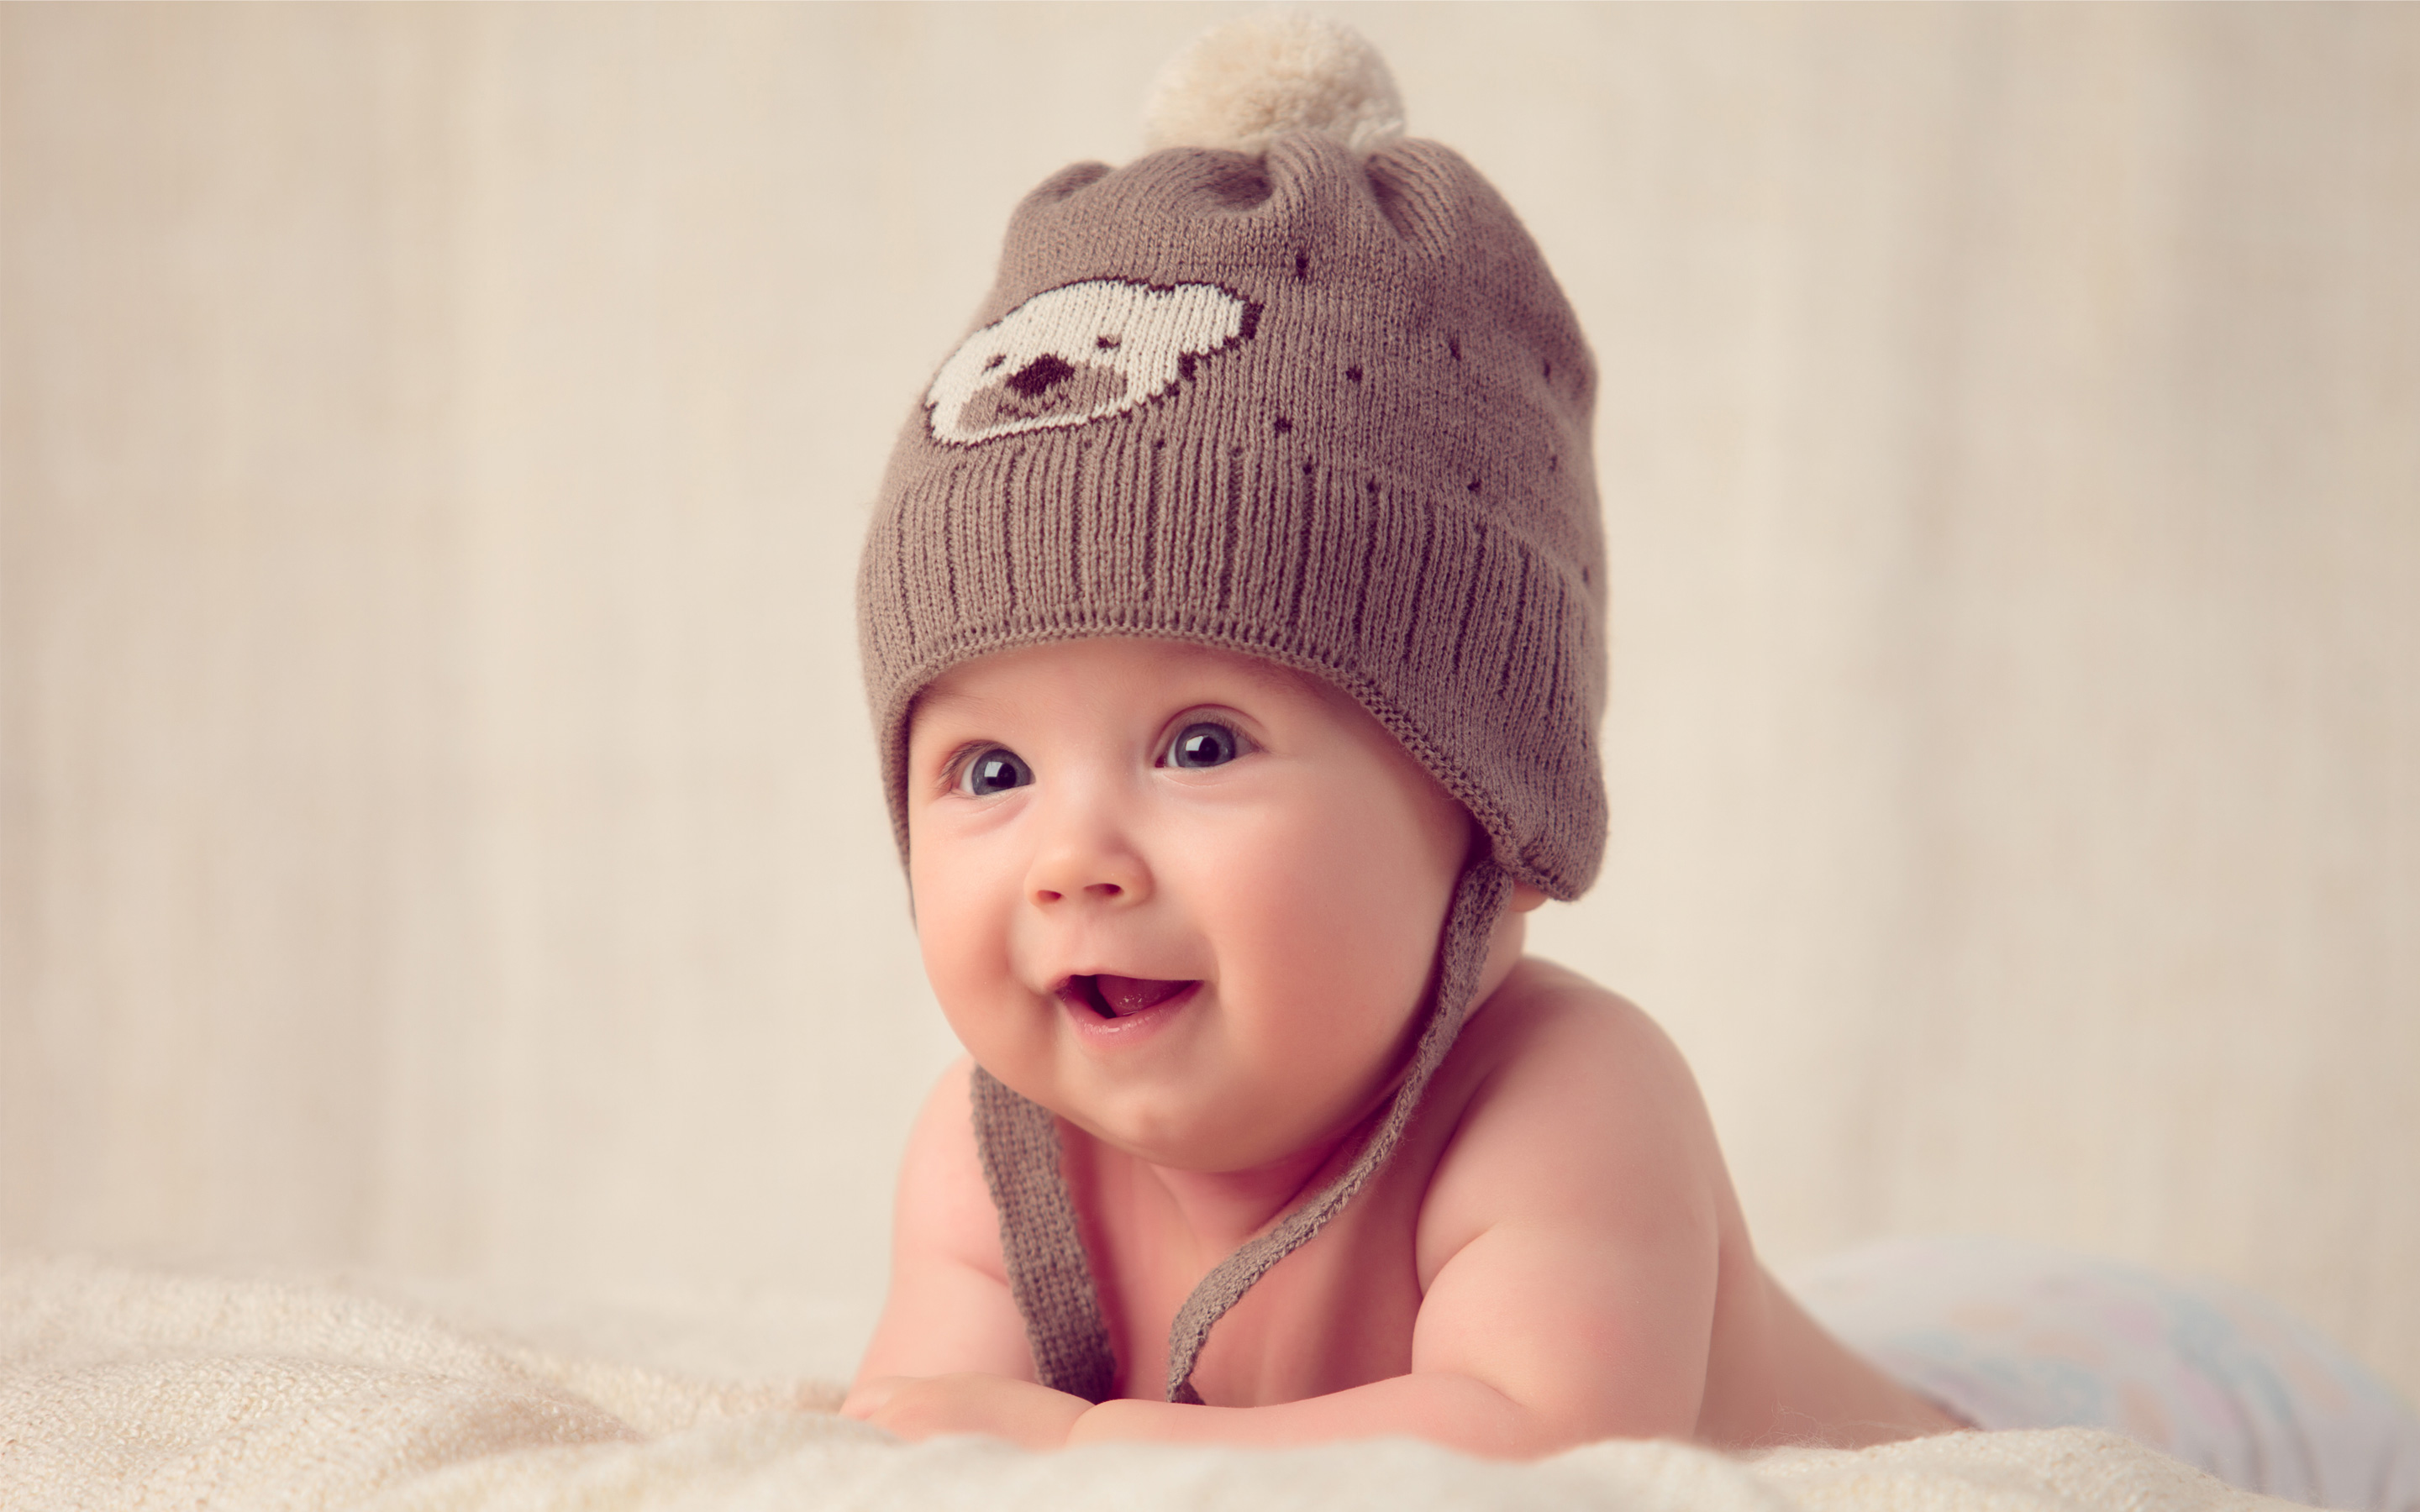 Cute Baby Hat Cap209951938 - Cute Baby Hat Cap - NewBorn, Cute, Baby